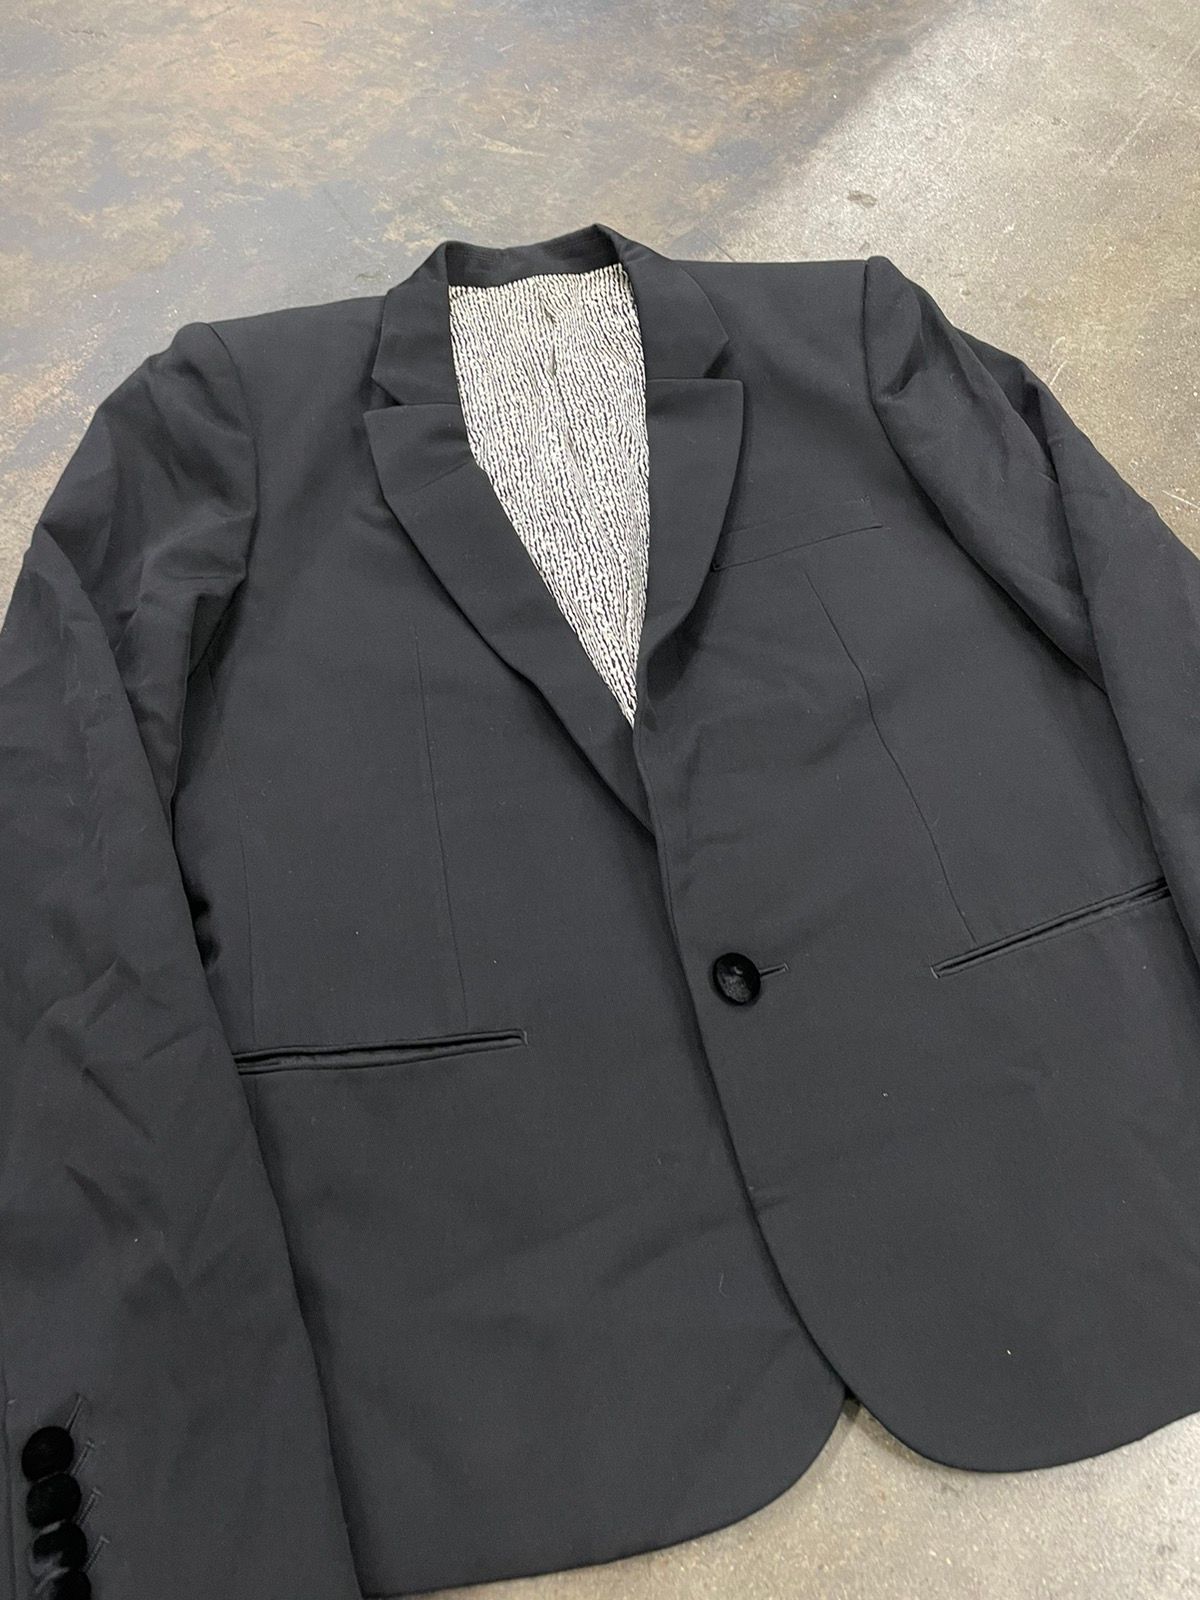 Pre-owned Number N Ine X Takahiromiyashita The Soloist Number (n)ine Aw 07 Black Blazer Jacket (size 40r)